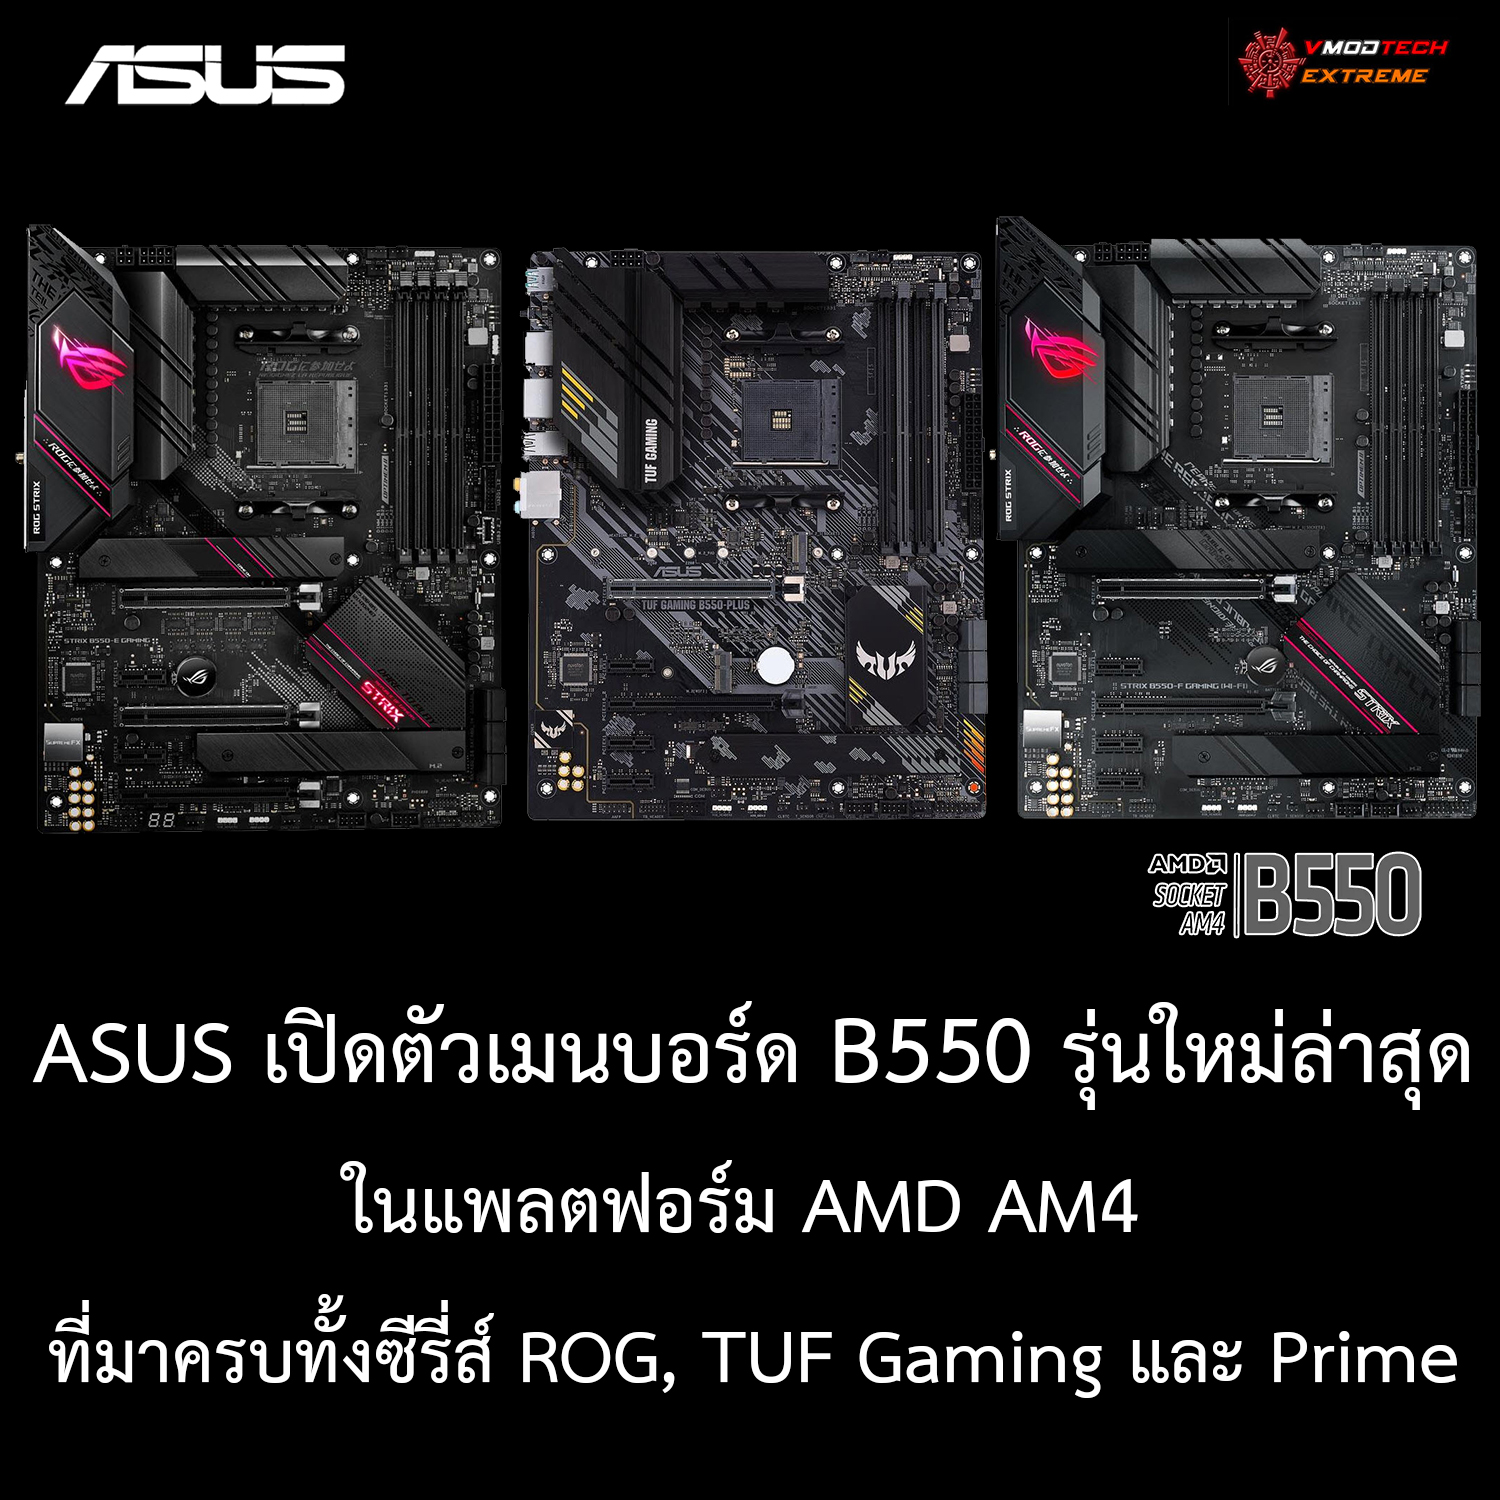 asus b550 motherboards ASUS ประกาศเปิดตัวเมนบอร์ด B550 รุ่นใหม่ล่าสุดในแพลตฟอร์ม AMD AM4 ที่มาครบทั้งซีรี่ส์ ROG, TUF Gaming และ Prime